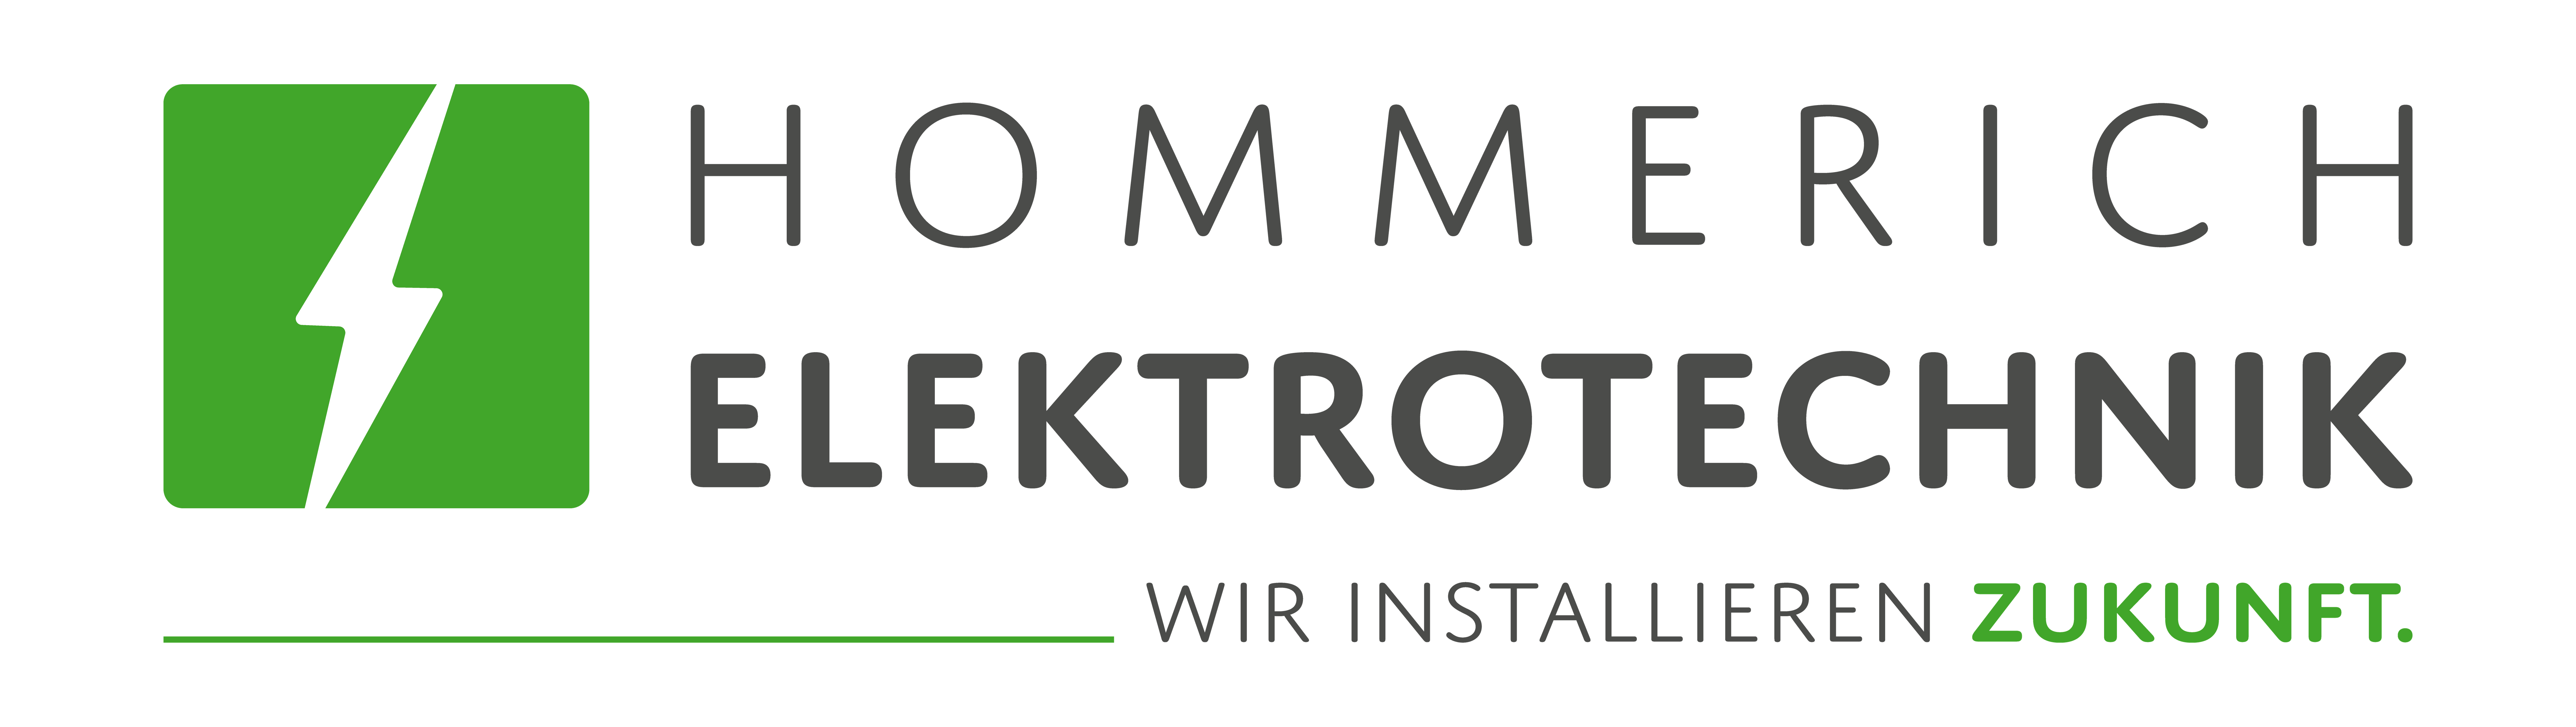 Logo - Hommerich Elektrotechnik GmbH, Wilnsdorf